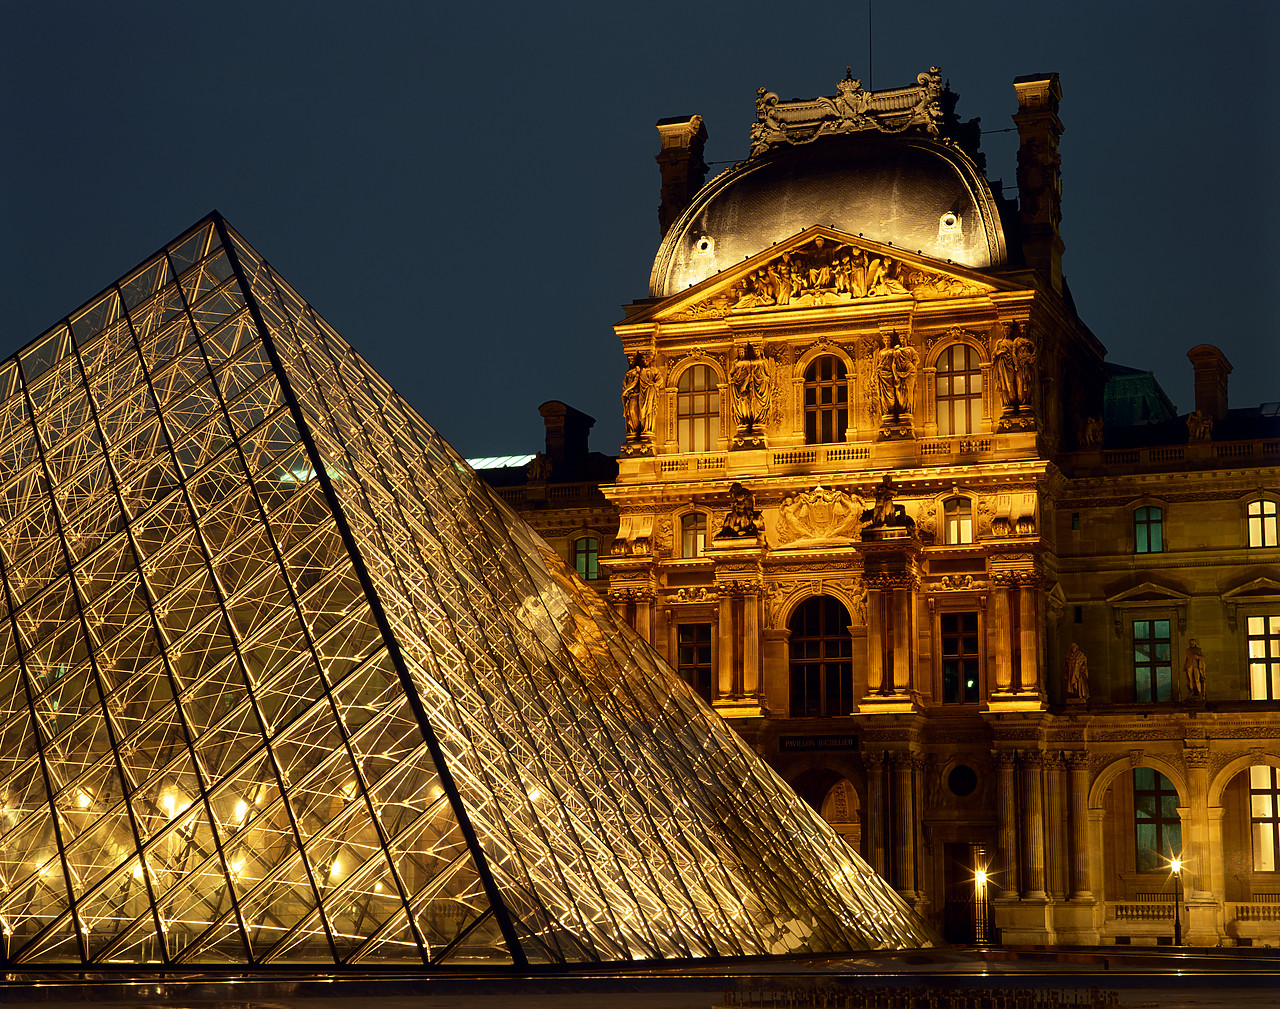 #010163-4 - The Louvre & Pyramid at Night, Paris, France